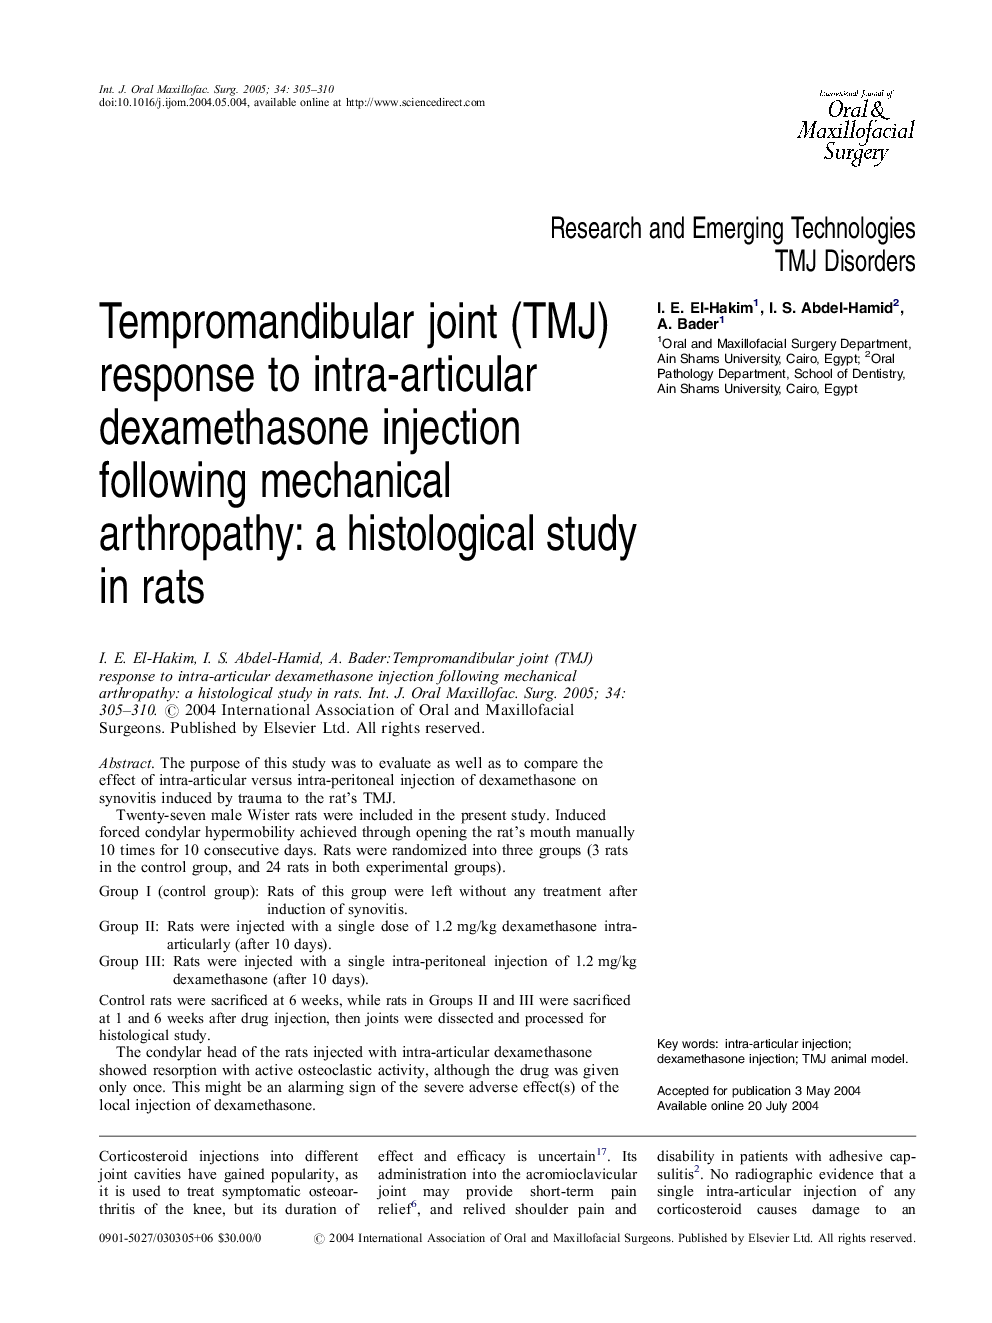 Tempromandibular joint (TMJ) response to intra-articular dexamethasone injection following mechanical arthropathy: a histological study in rats